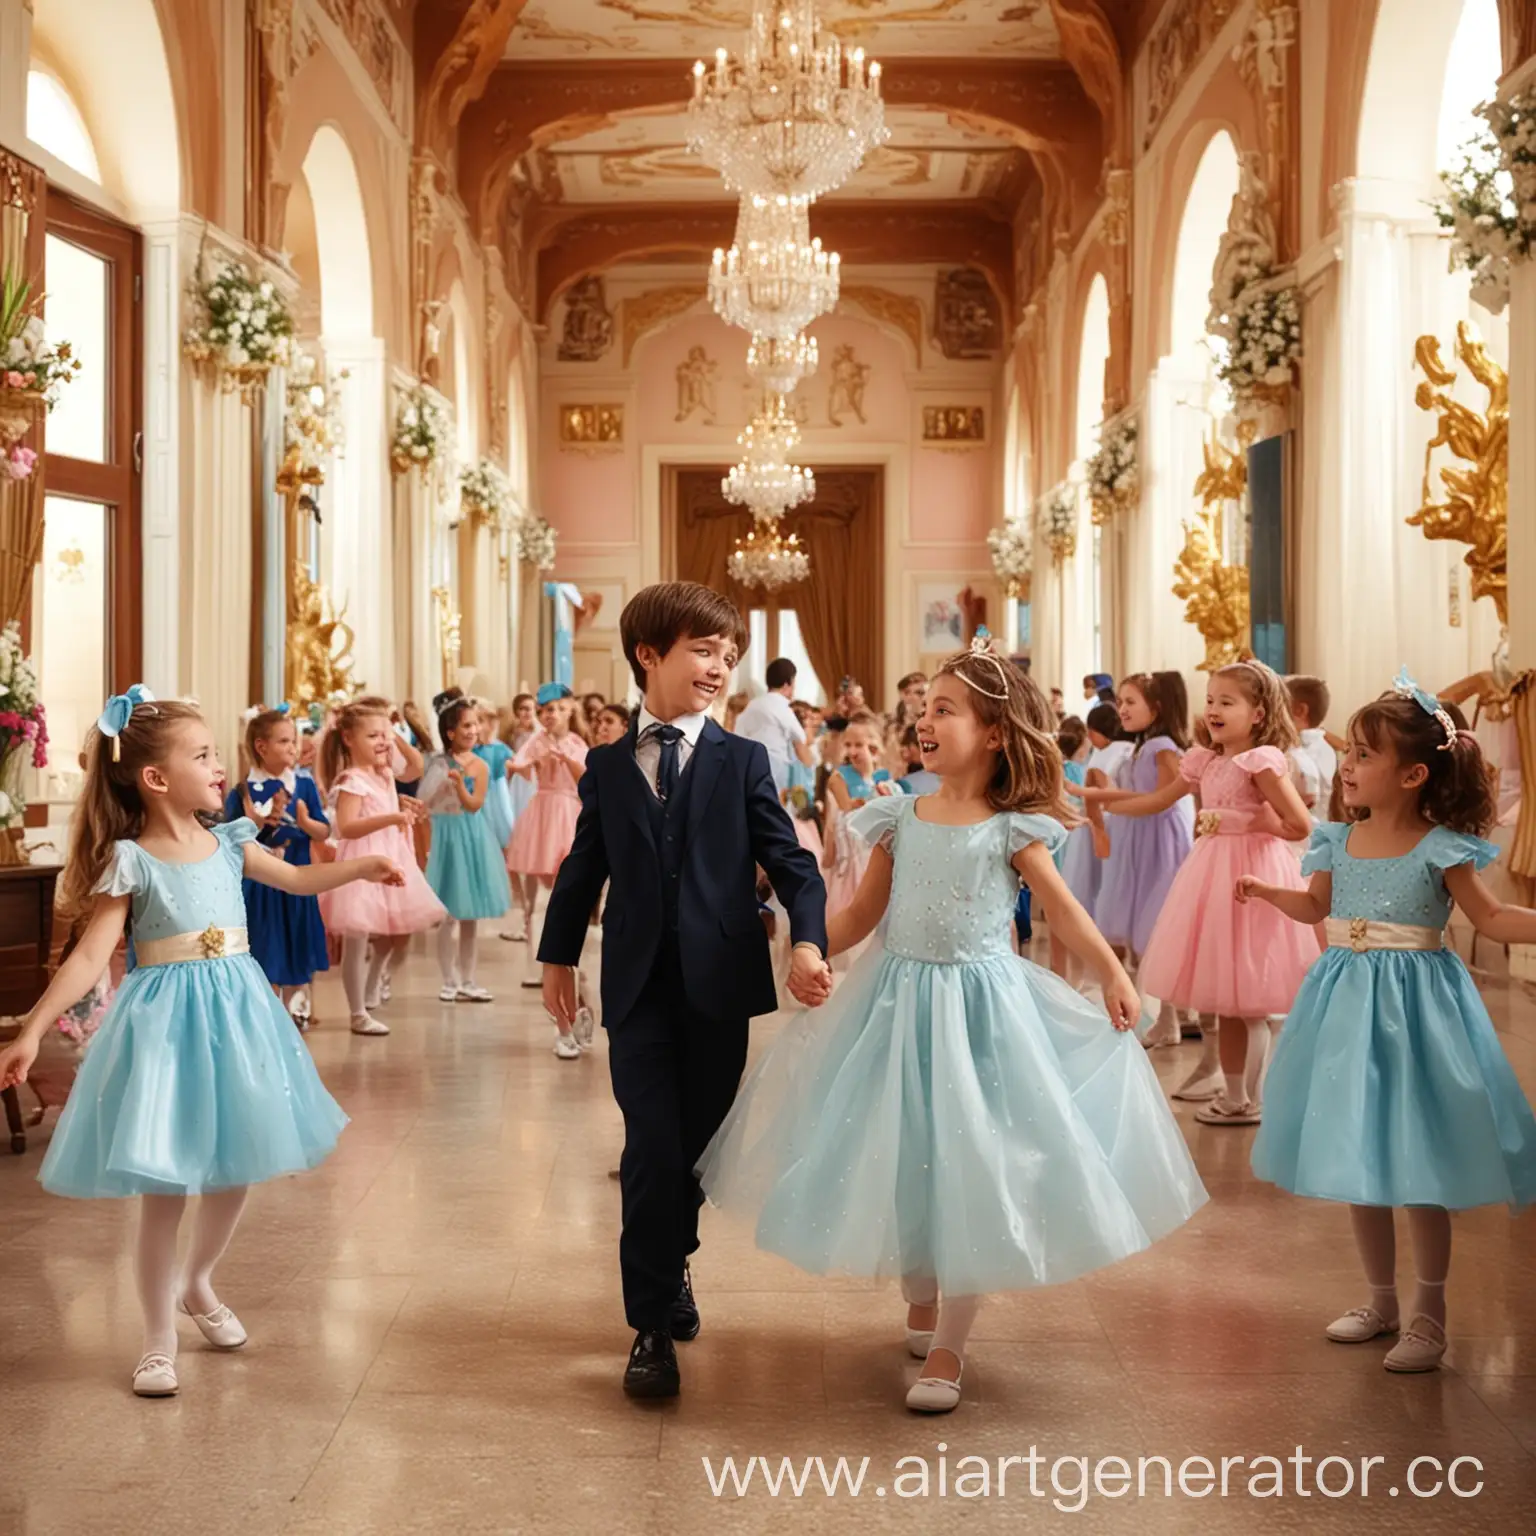 Luxurious-Kindergarten-Graduation-Girls-and-Boys-Dancing-in-Decorated-Hall